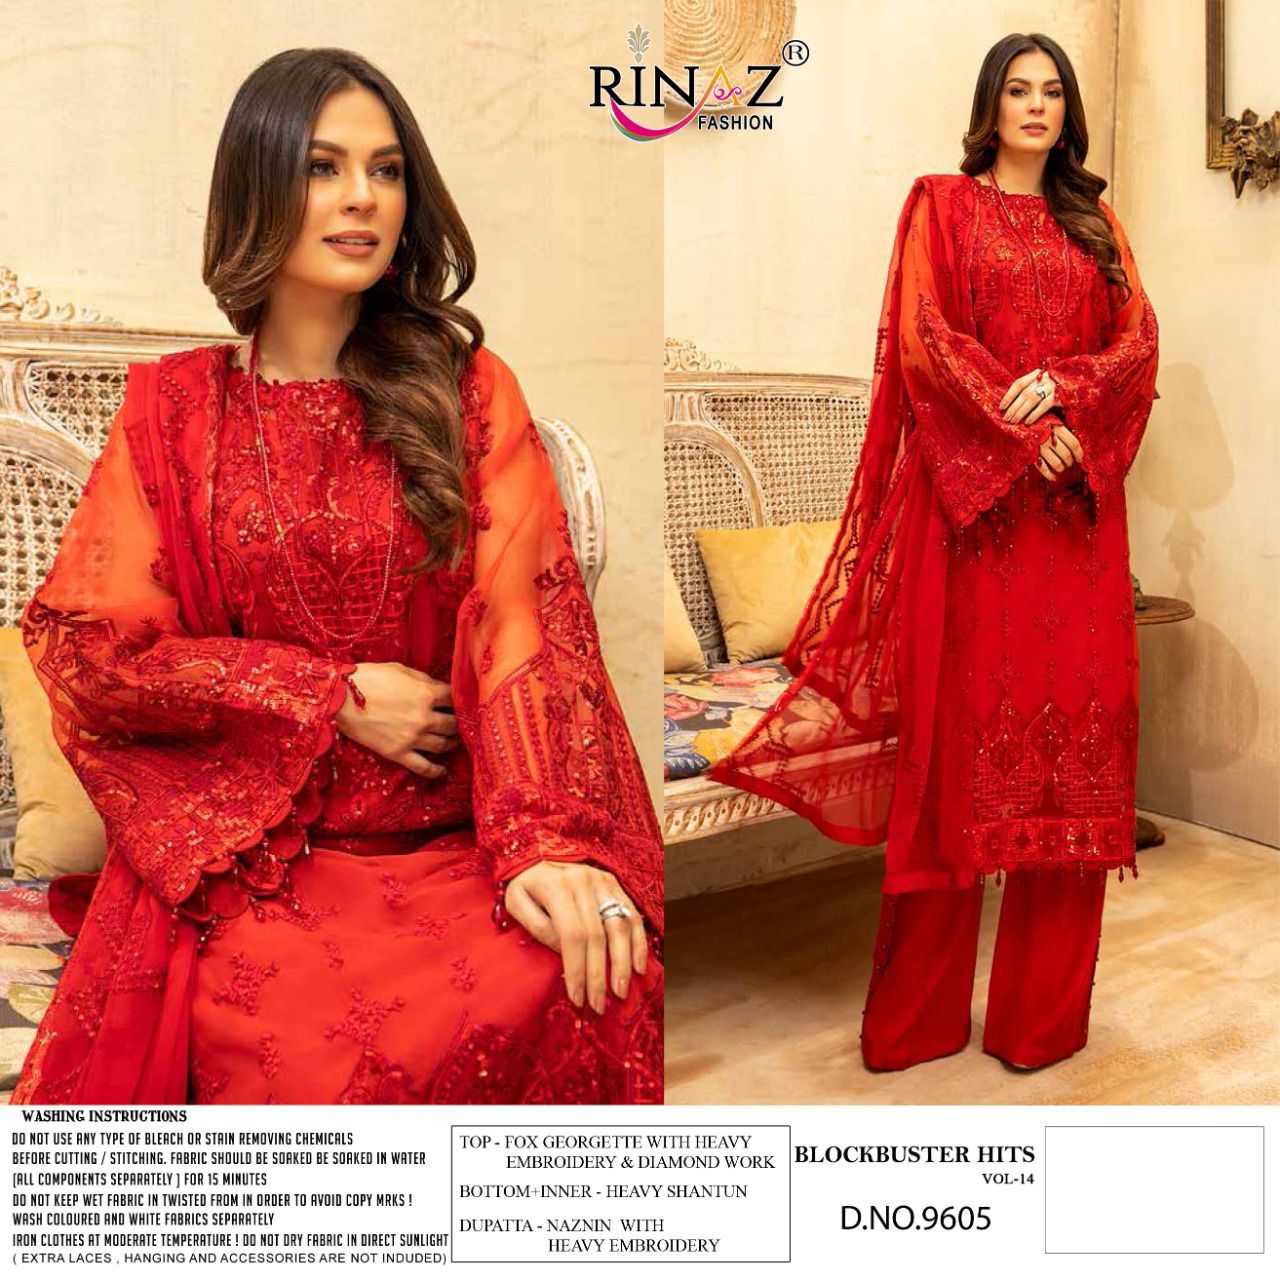 Rinaz Block Buster Hits Vol 14 Georgette Wear Pakistani Salwar Kameez Catalog